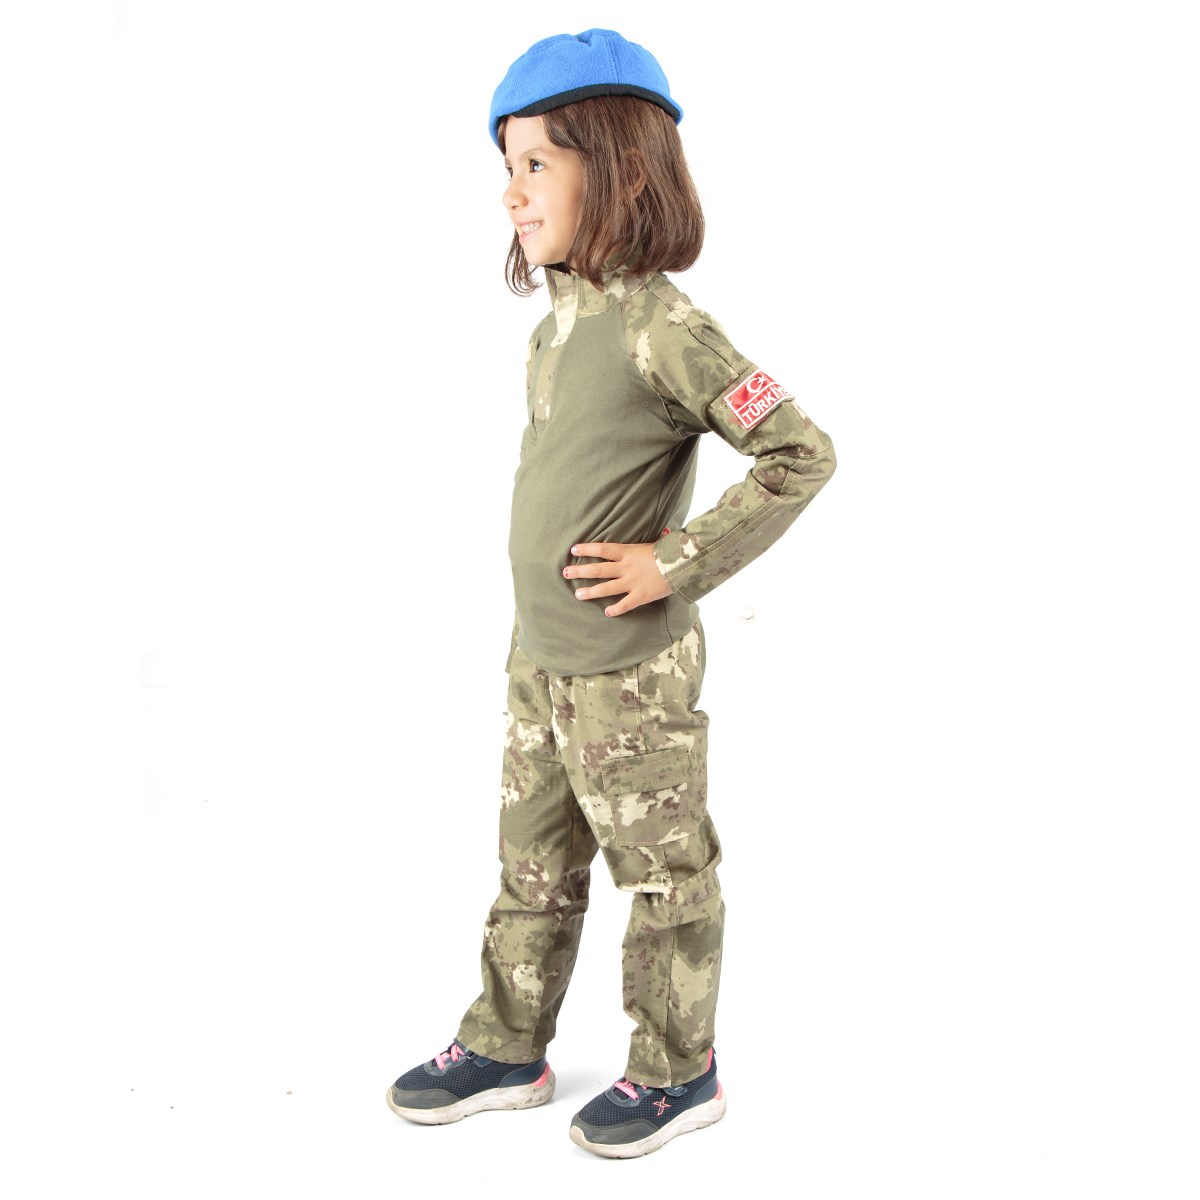 Tsk Asker Çocuk Kıyafeti Combat Tişörtlü - Polis Sepeti